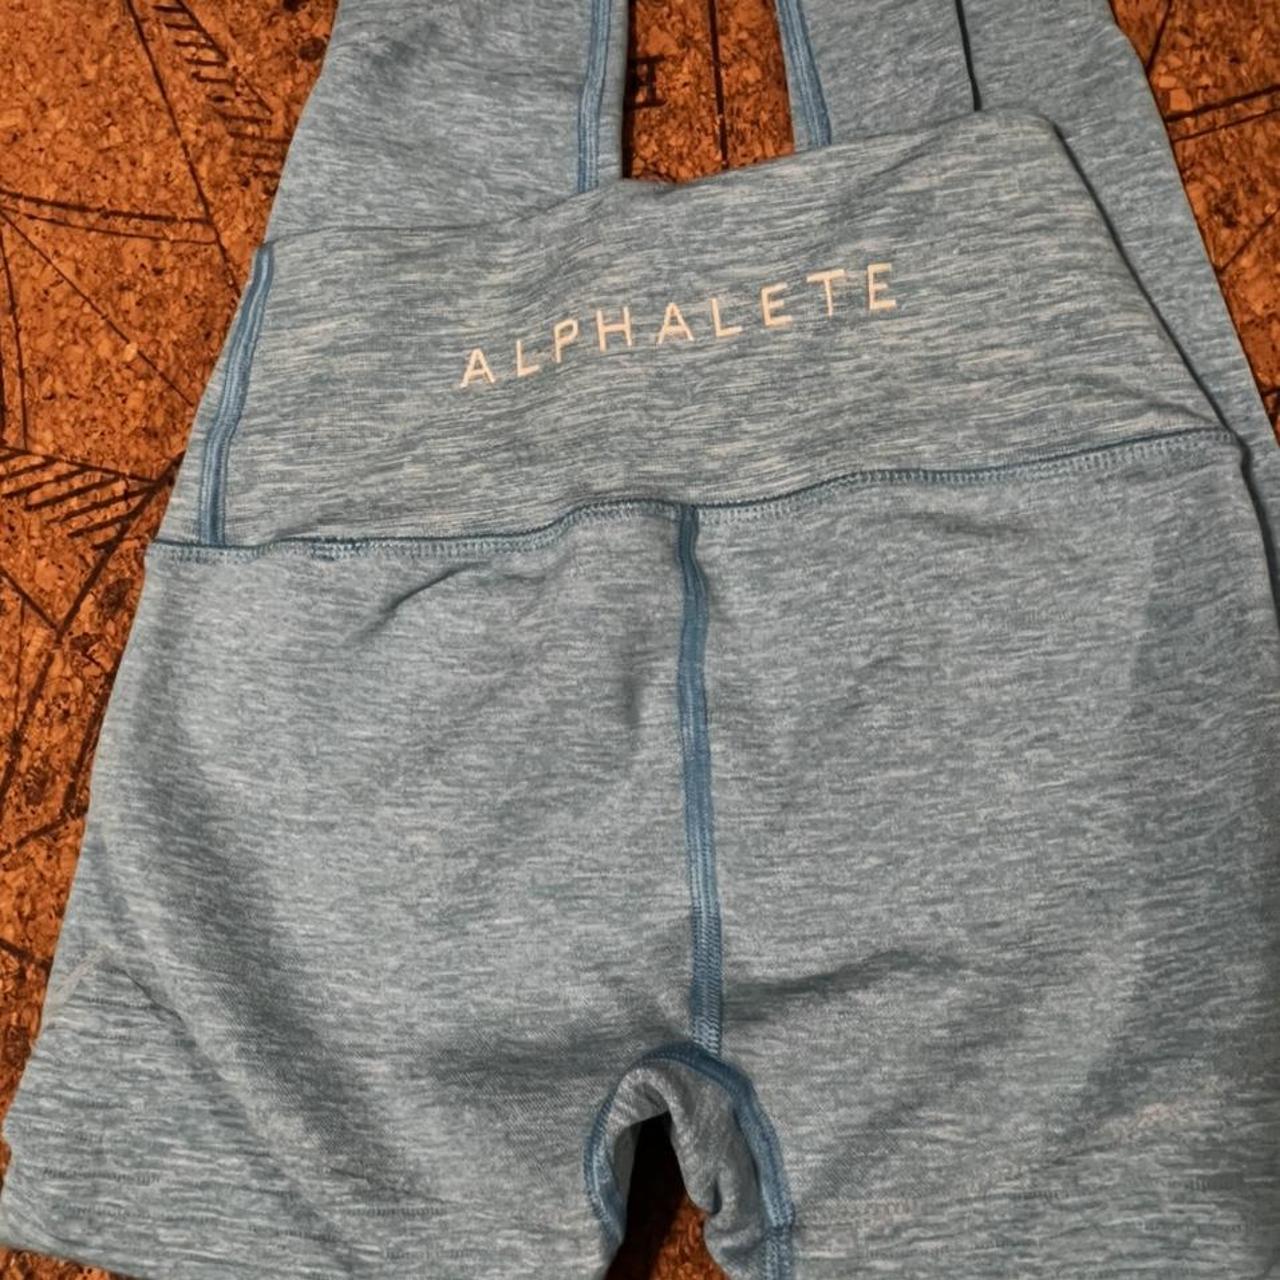 Alphalete revival R6 leggings size S in great - Depop